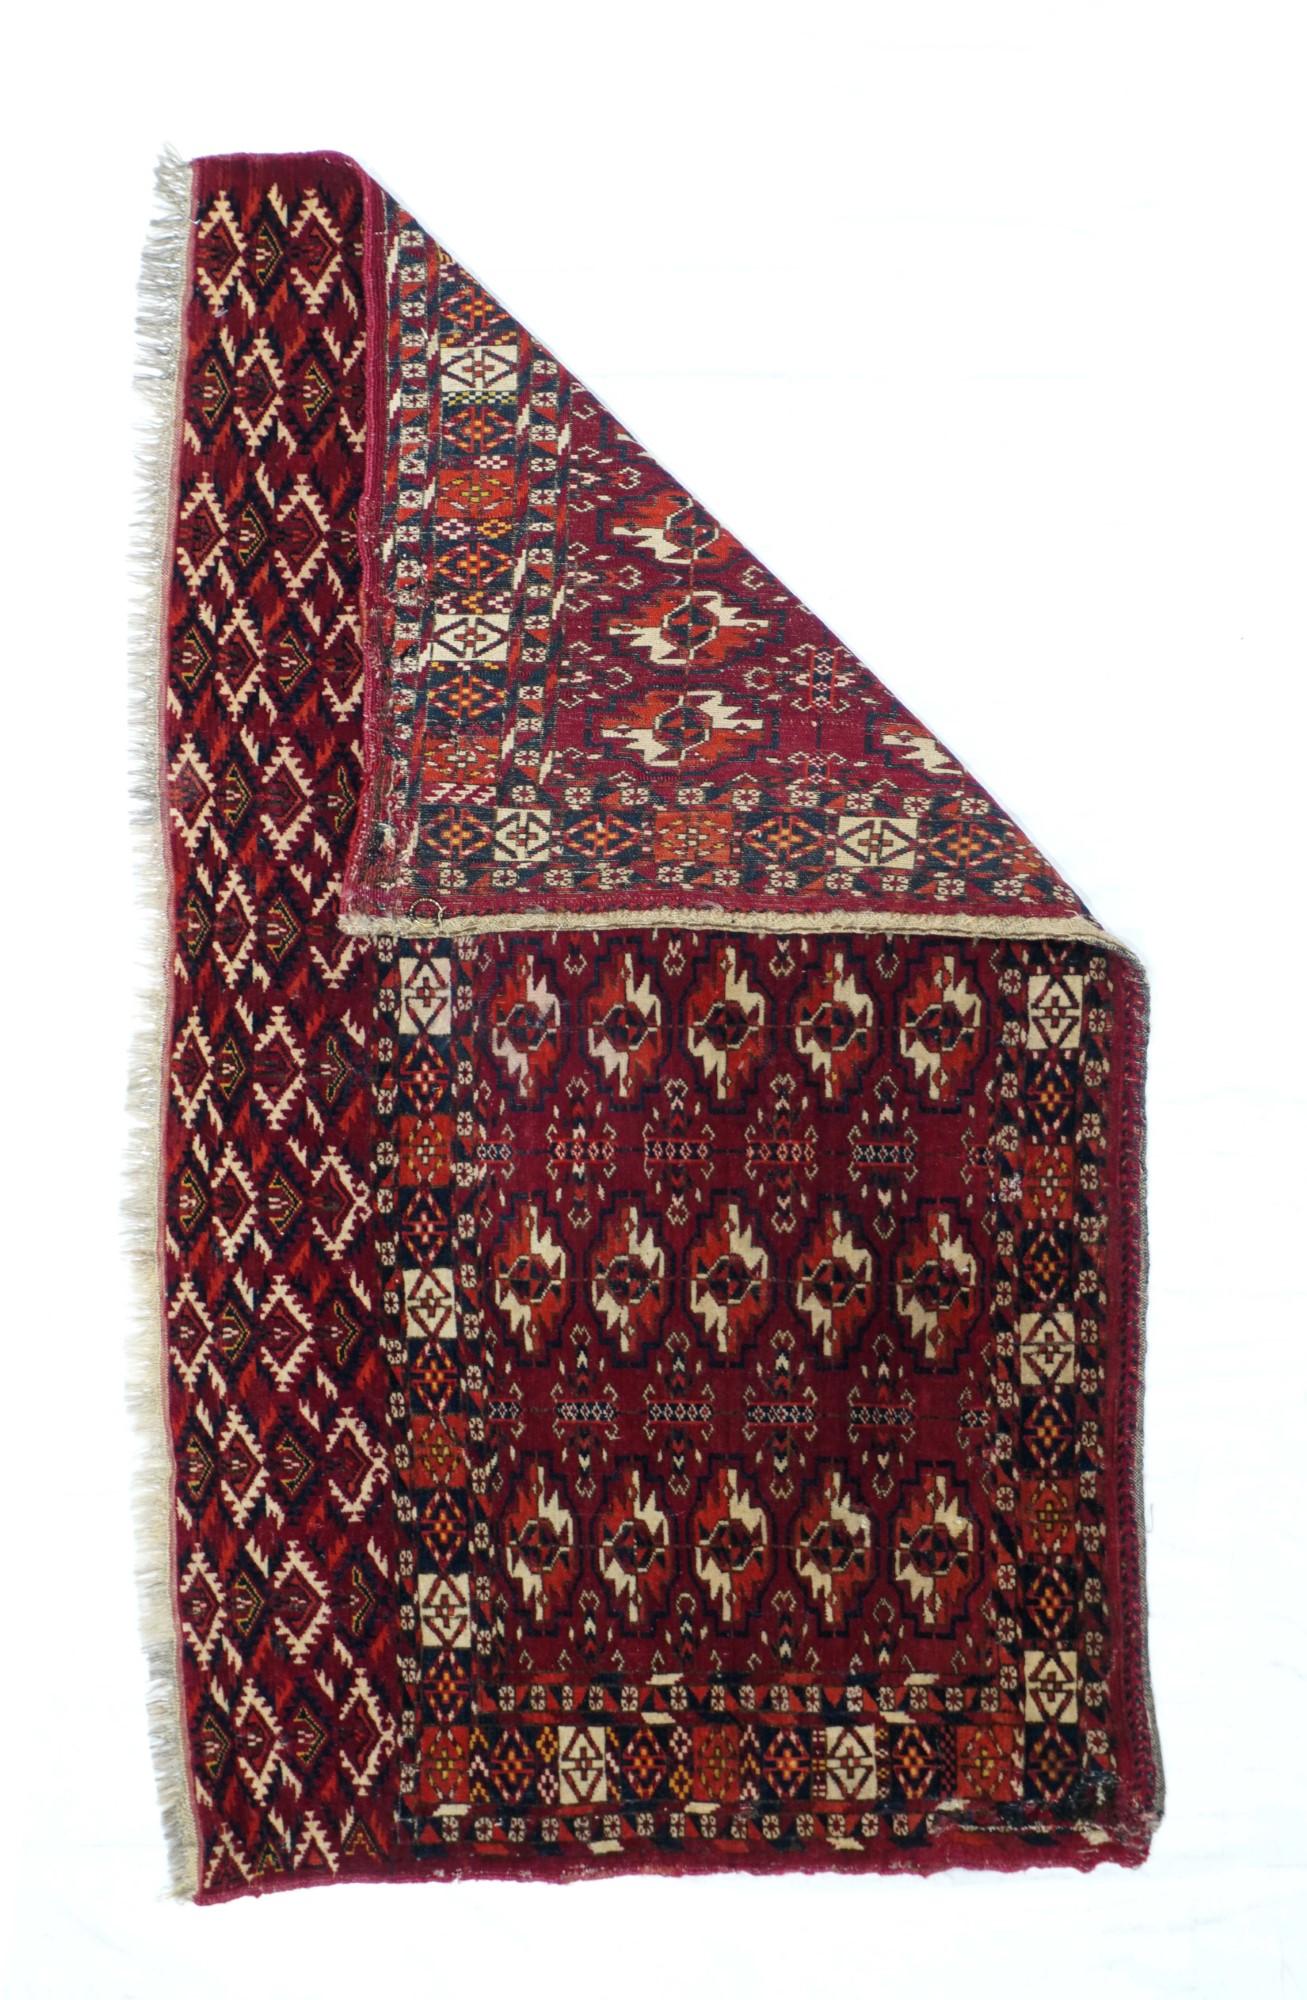 Antique Turkeman rug. Measures: 2.3'' x 4'.